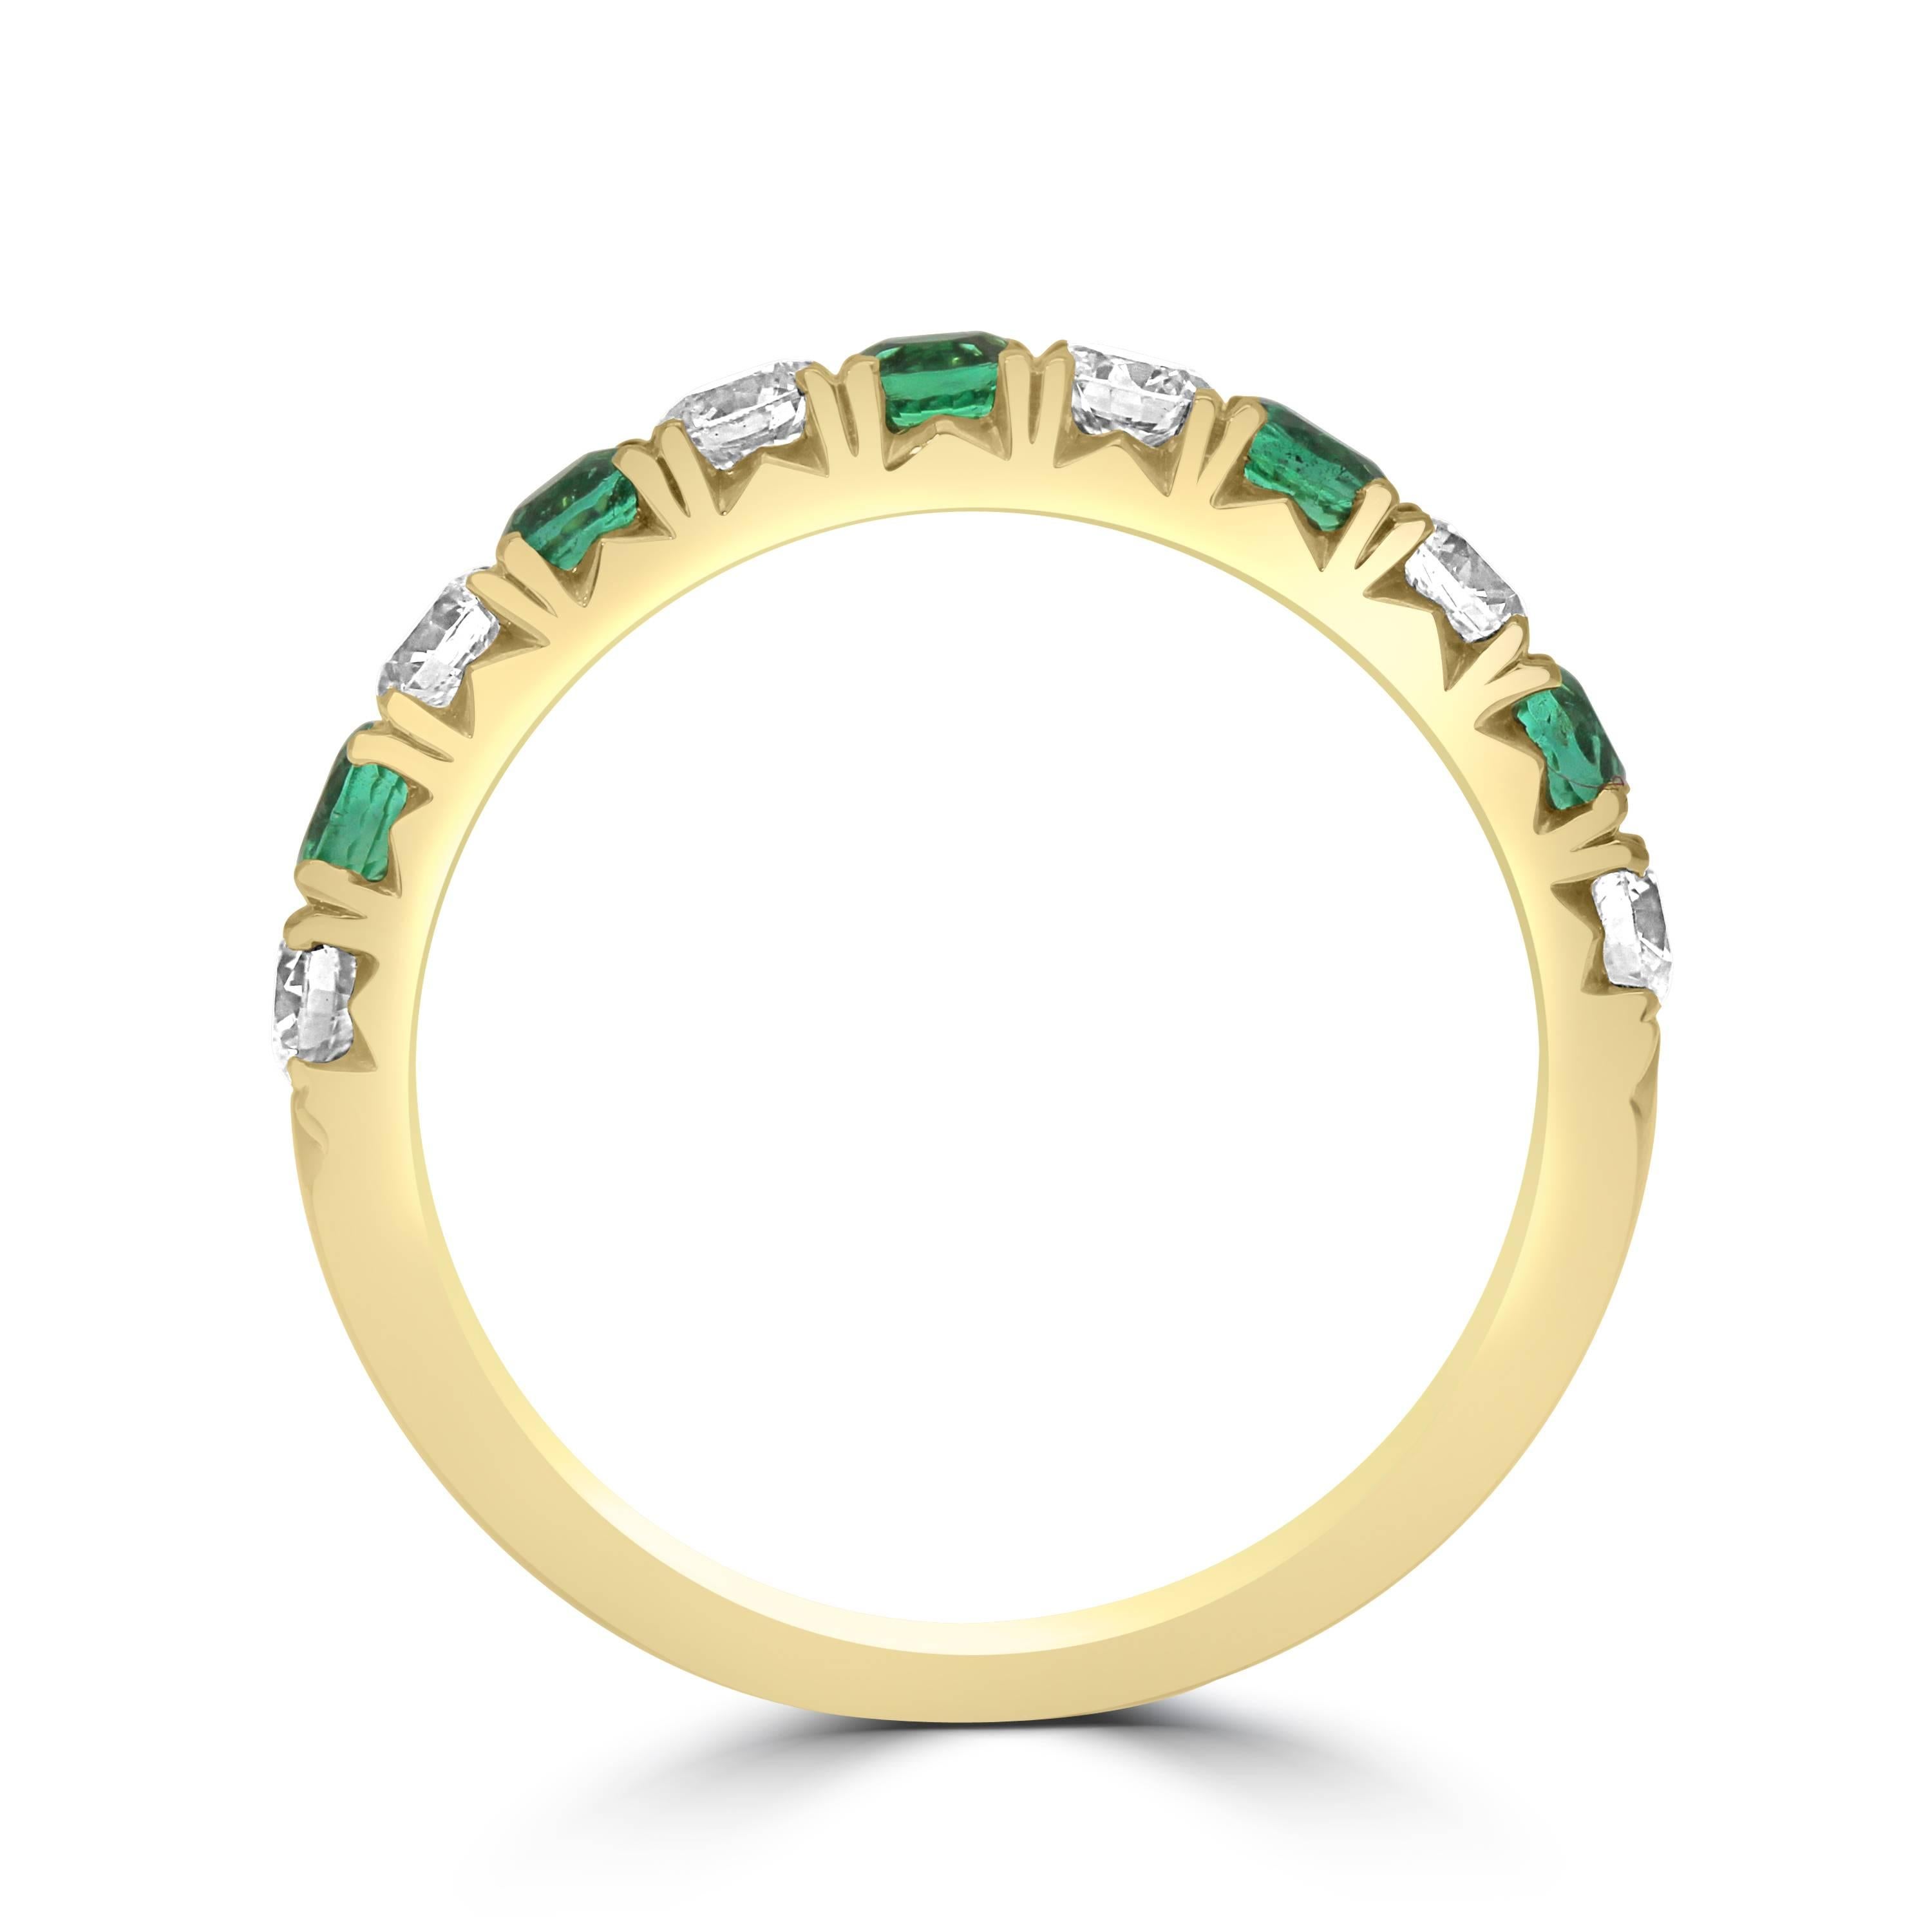 Round Cut Eternity Band Half Set with Diamonds and Emerald gemstones